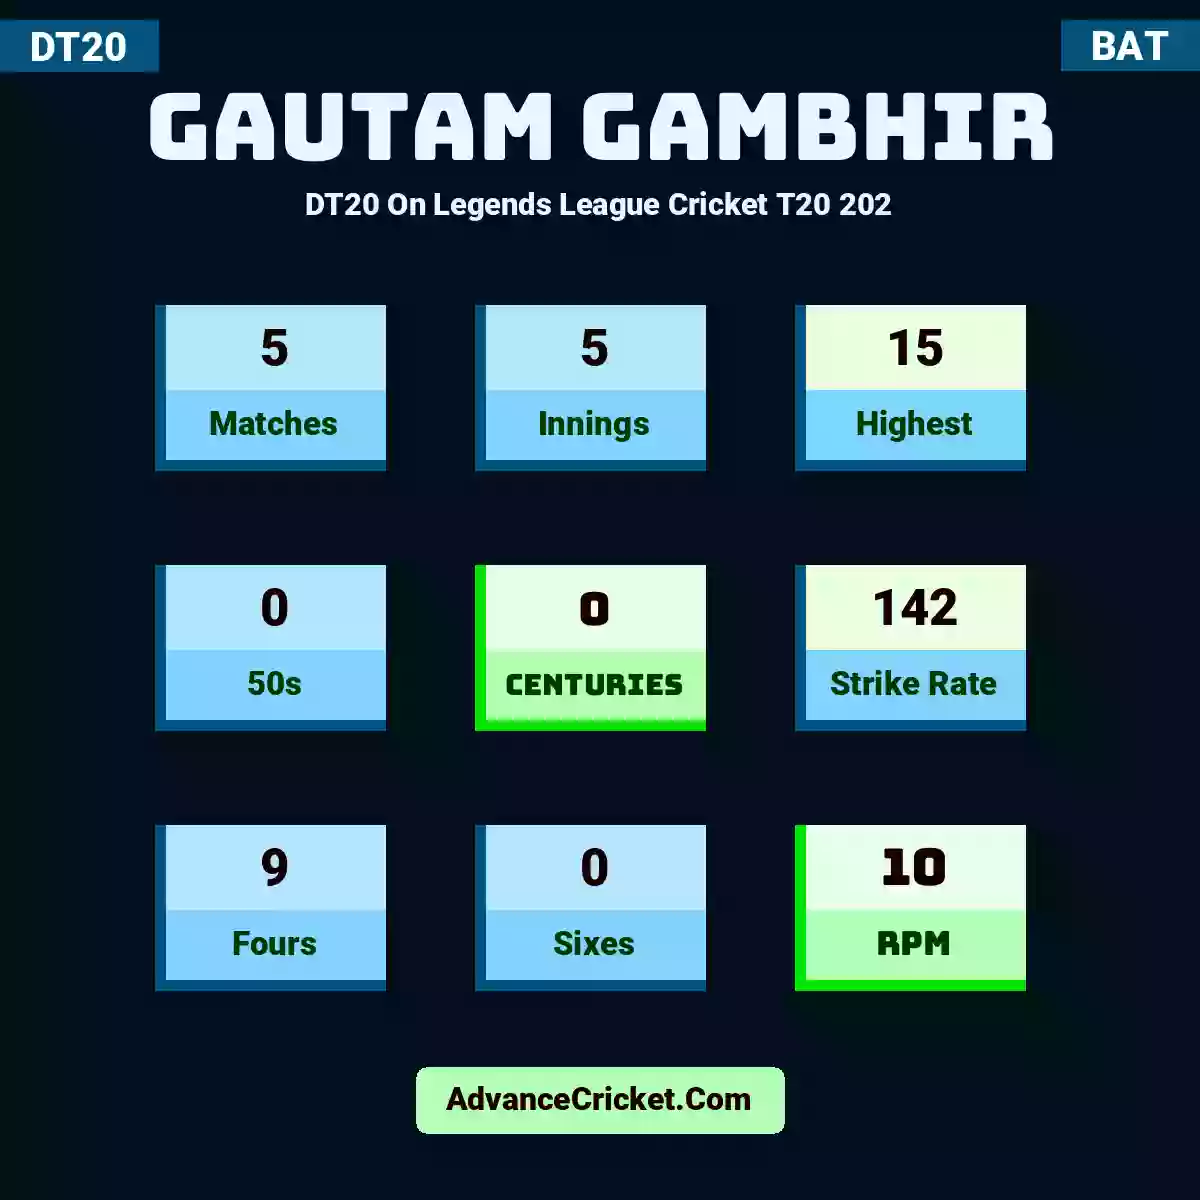 Gautam Gambhir DT20  On Legends League Cricket T20 202, Gautam Gambhir played 4 matches, scored 68 runs as highest, 3 half-centuries, and 0 centuries, with a strike rate of 160. G.Gambhir hit 35 fours and 1 sixes, with an RPM of 53.